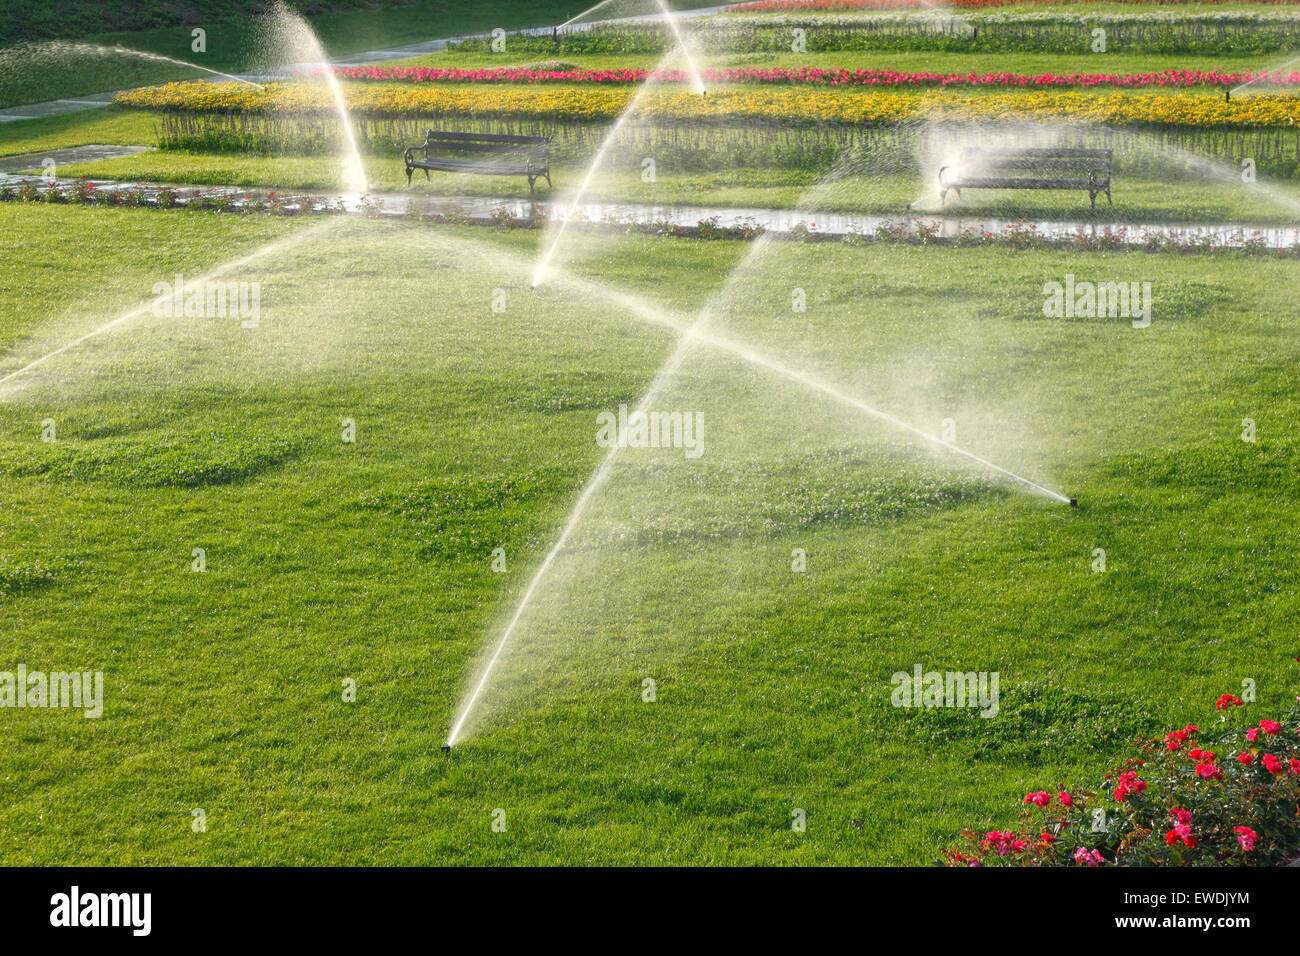 Impianto sprinkler automatico irrigare l'erba Foto Stock